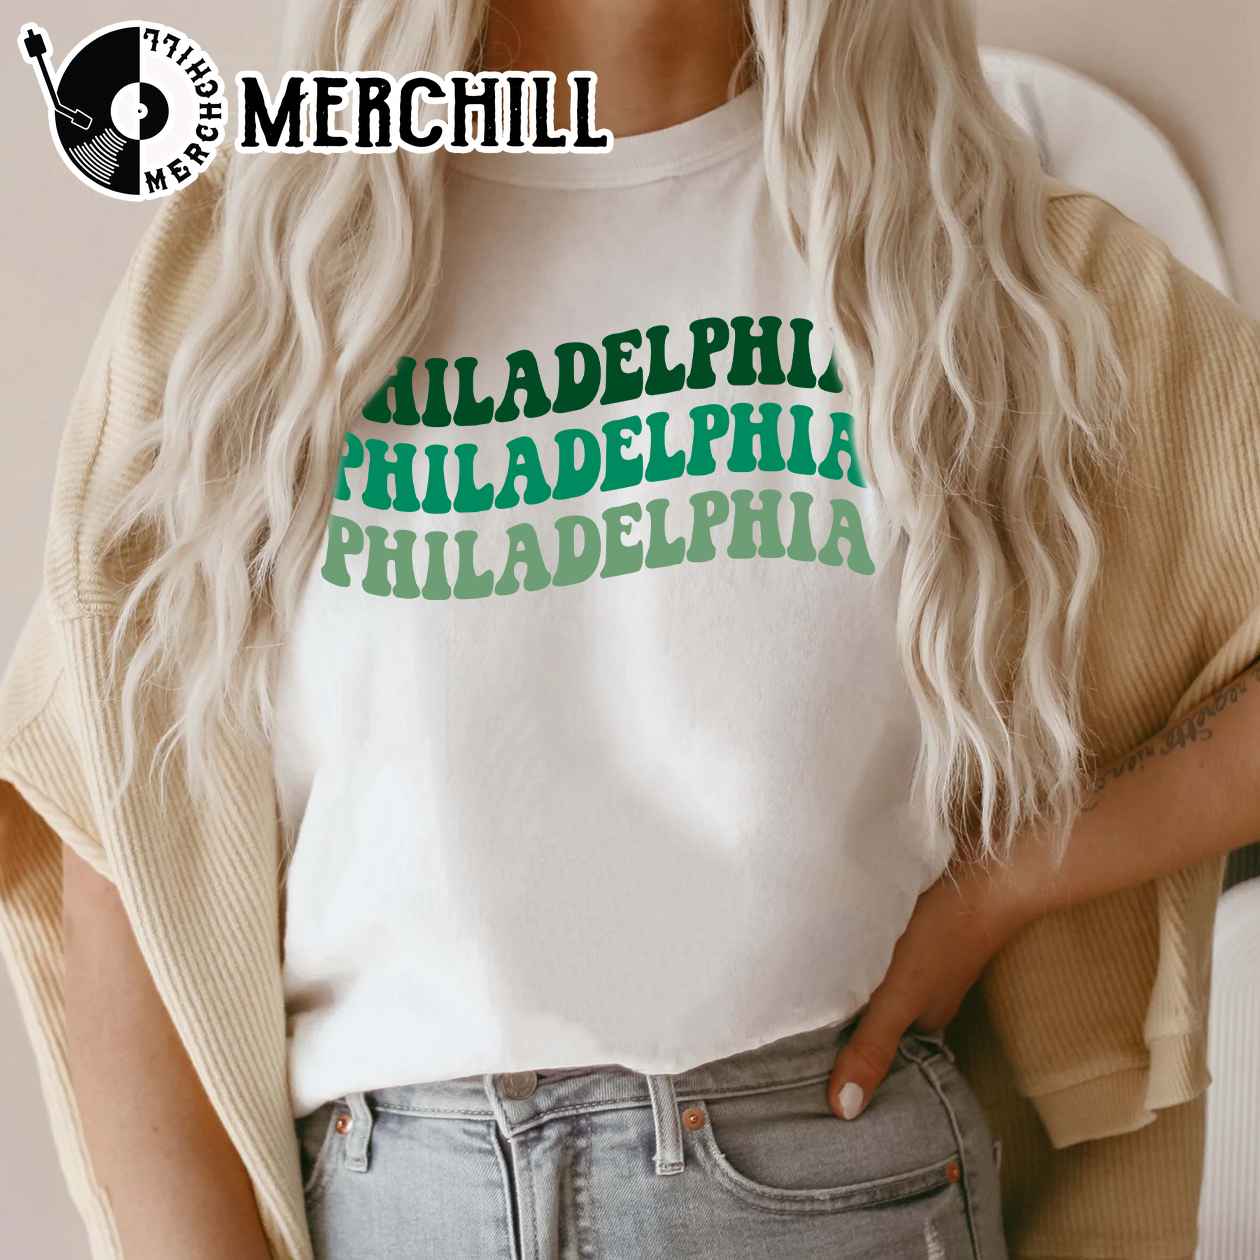 Philadelphia Eagles Vintage Sweatshirt Phillies Tshirt - Happy Place for  Music Lovers